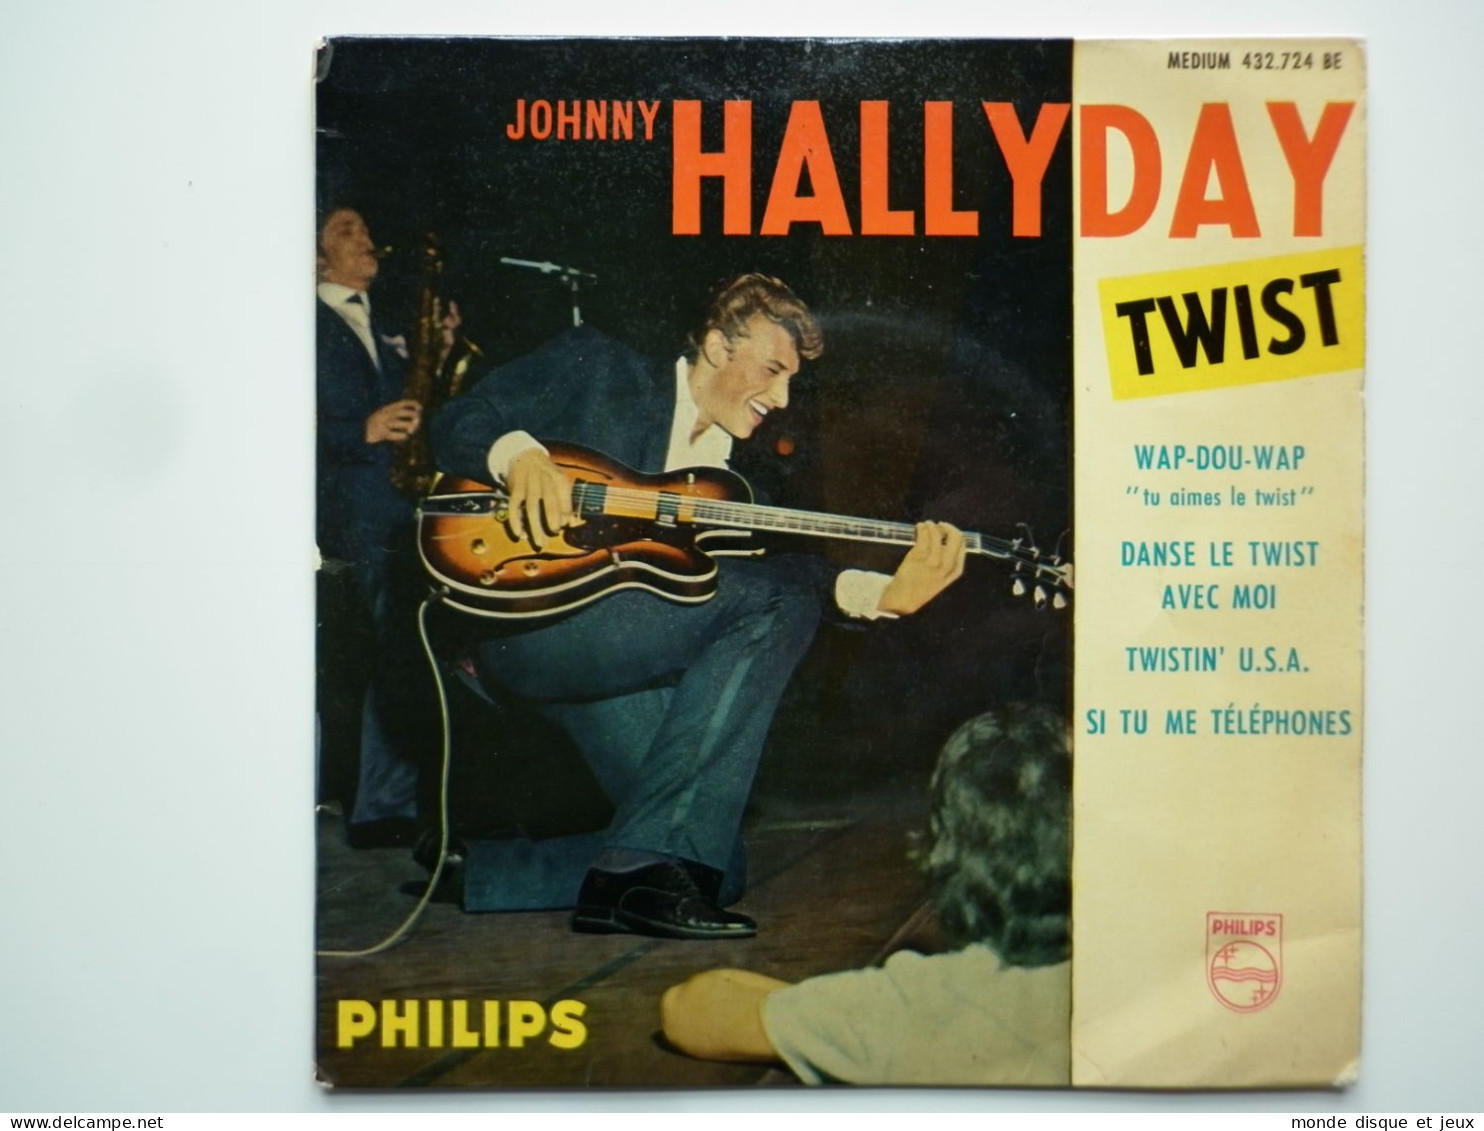 Johnny Hallyday 45Tours EP Vinyle Wap-Dou-Wap / Si Tu Me Téléphones - 45 G - Maxi-Single